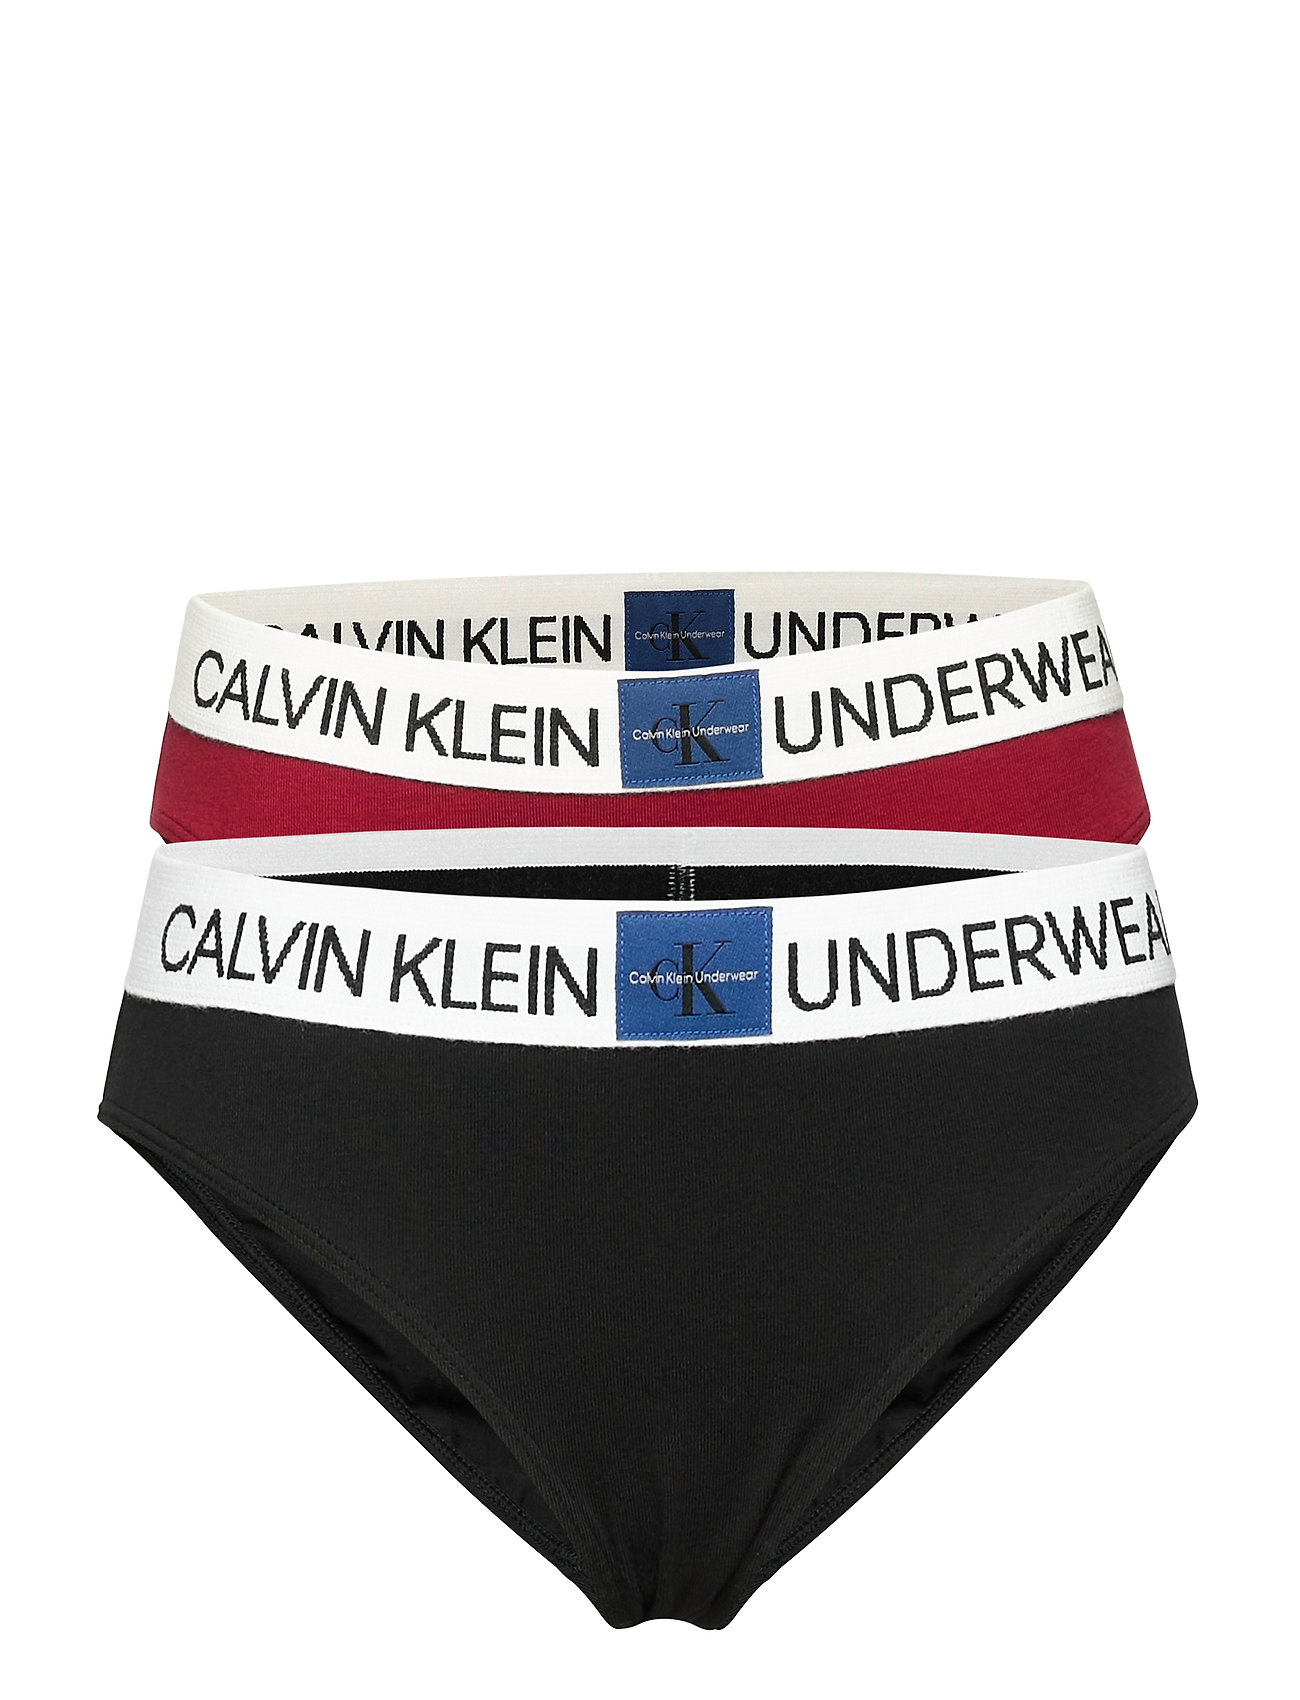 fremstille forklædt session 1RHUBARB/1PVHBLACK Calvin Klein 2pk Bikini Trusser Sort Calvin Klein  underbukser for børn - Pashion.dk